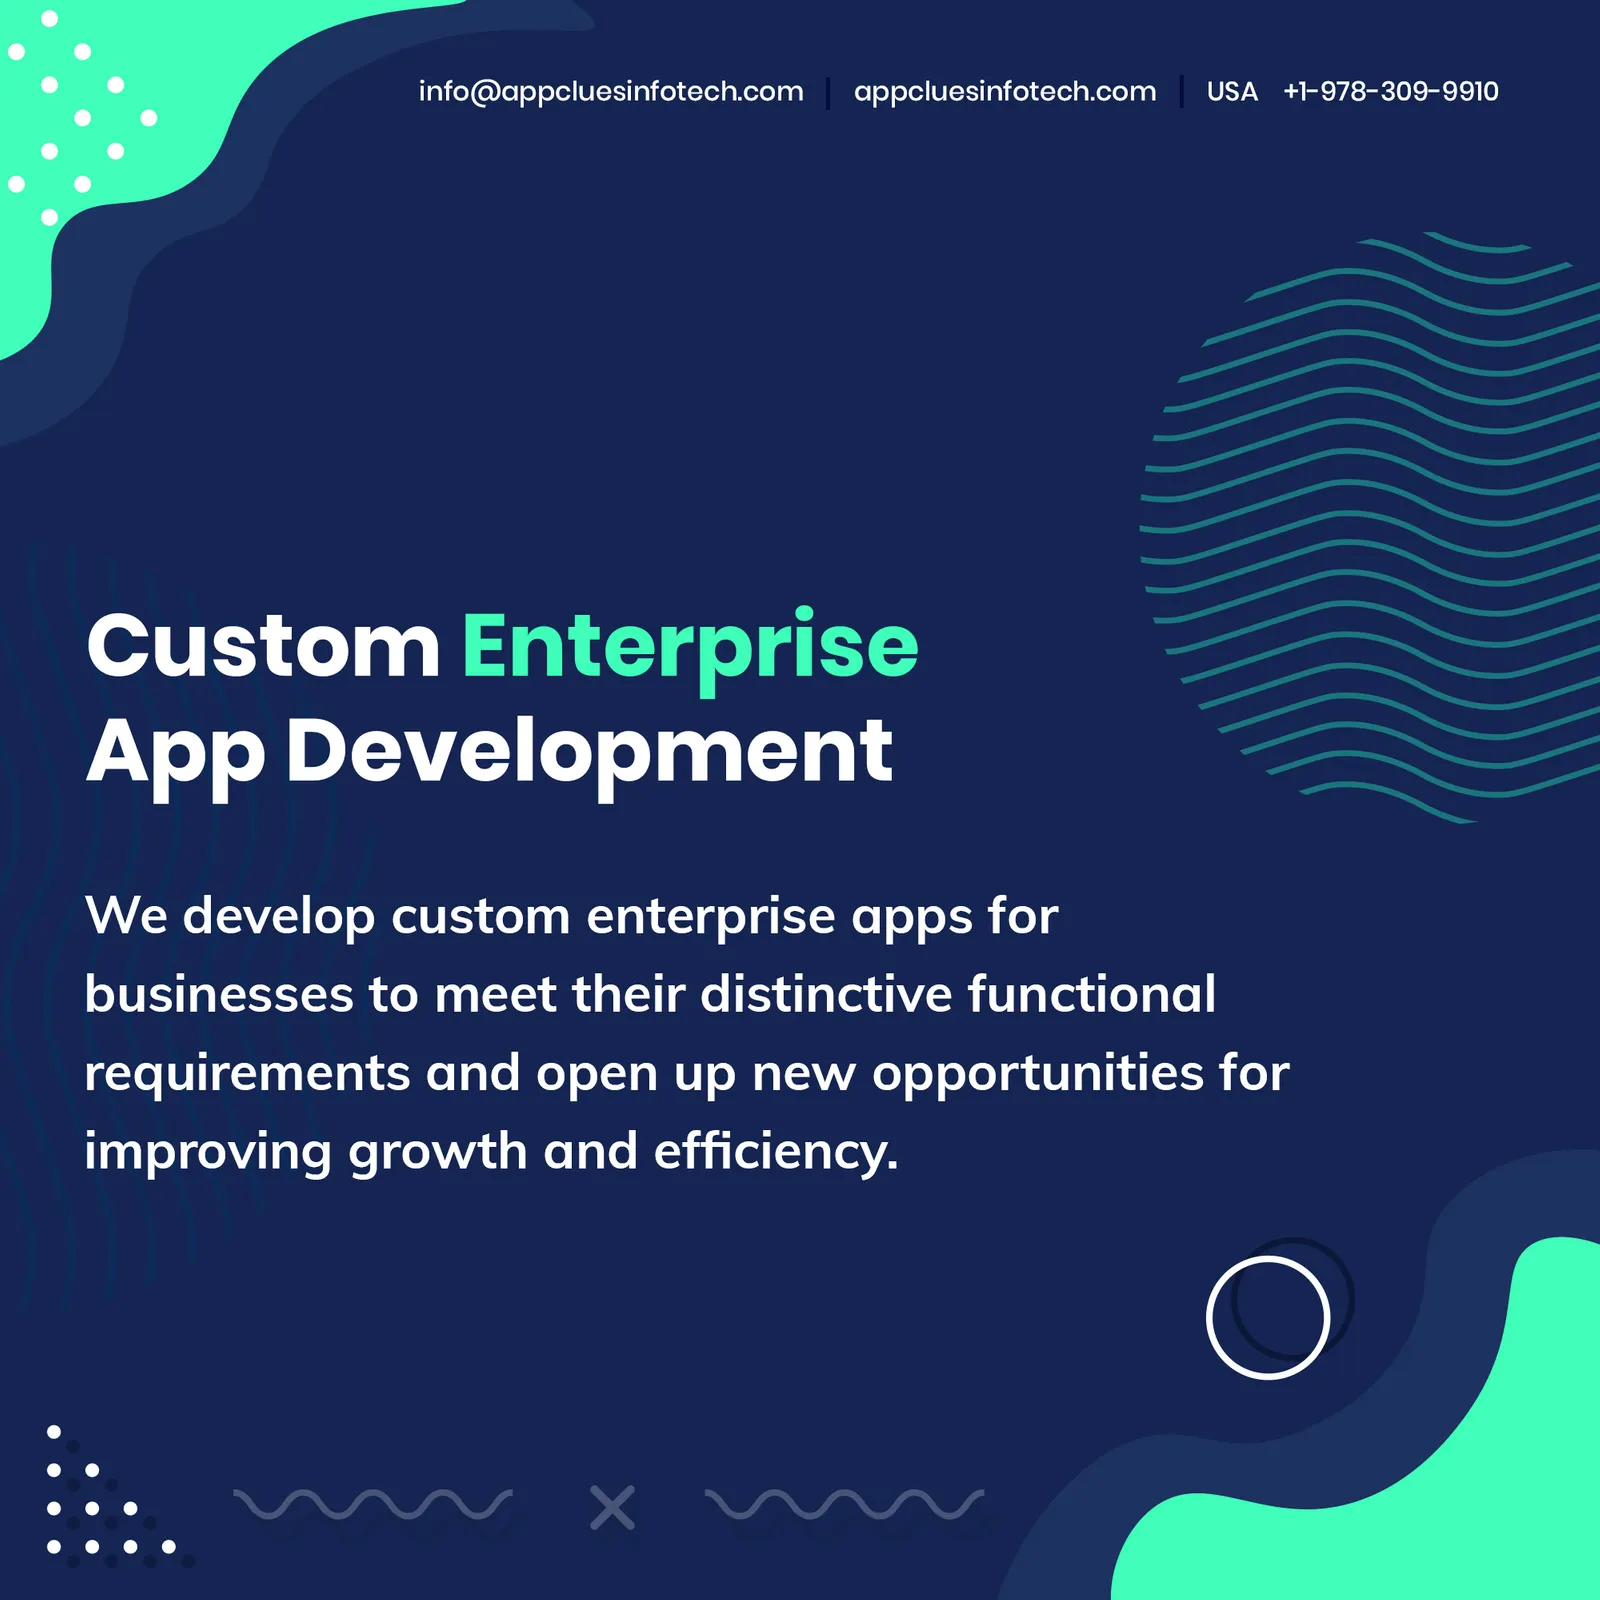 Custom Enterprise Mobile App Development Company in USA